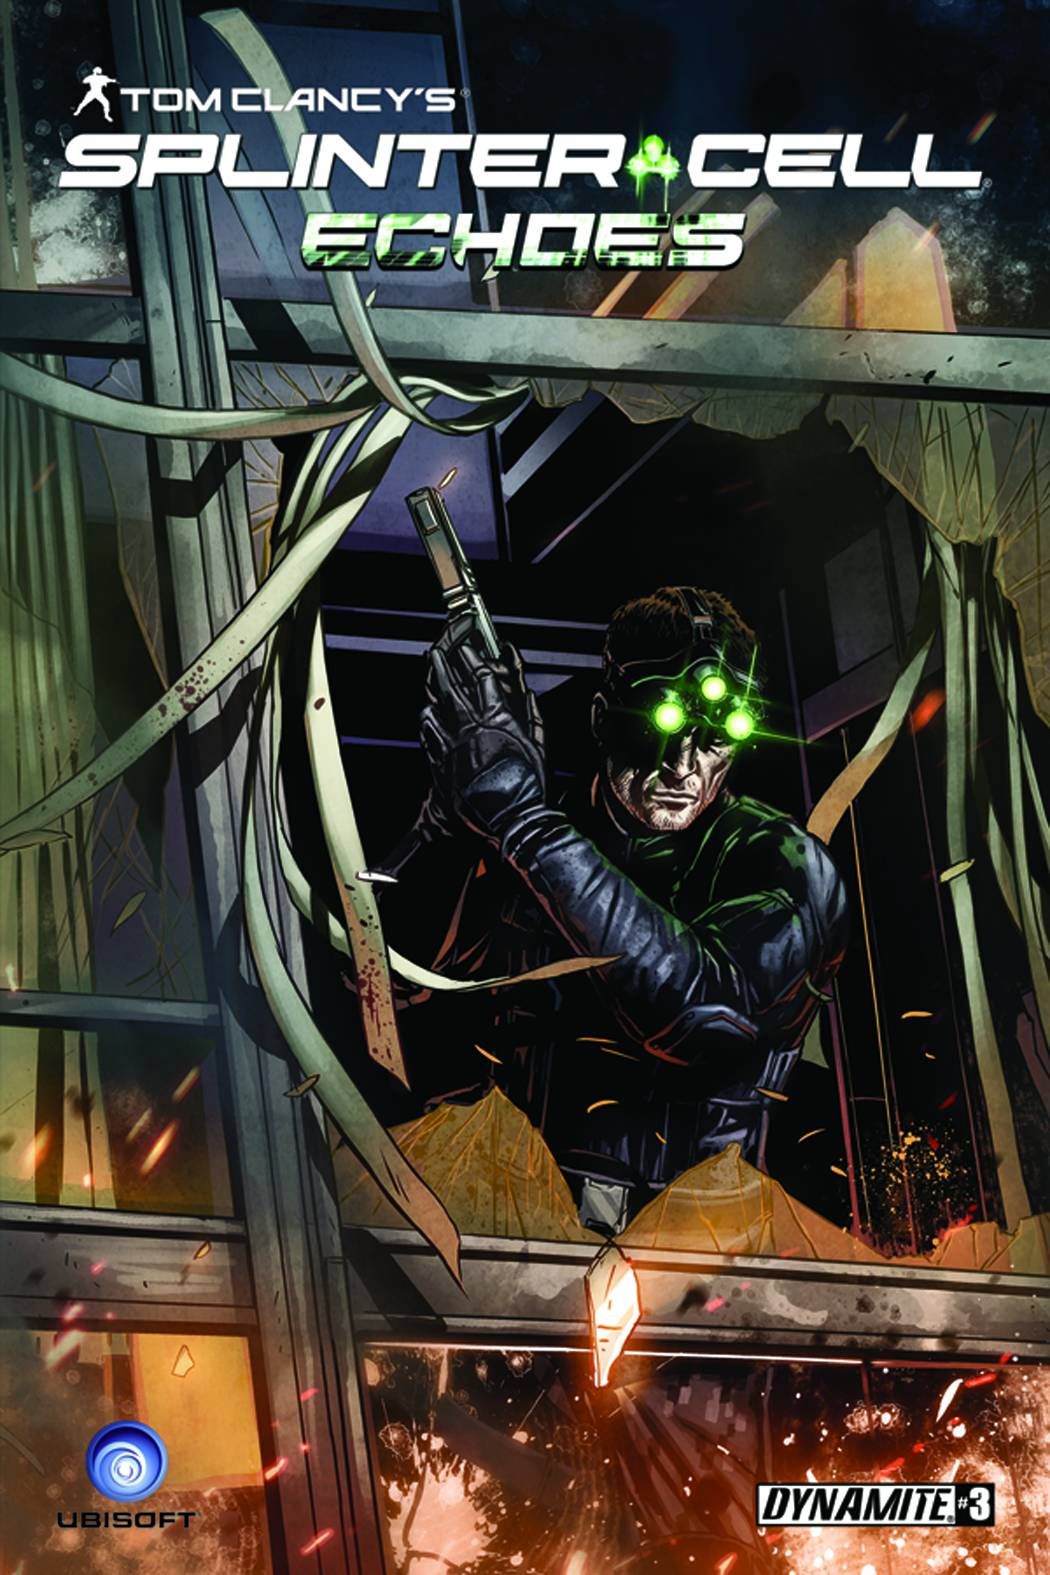 Tom Clancy's Splinter Cell: Echoes #3 Comic